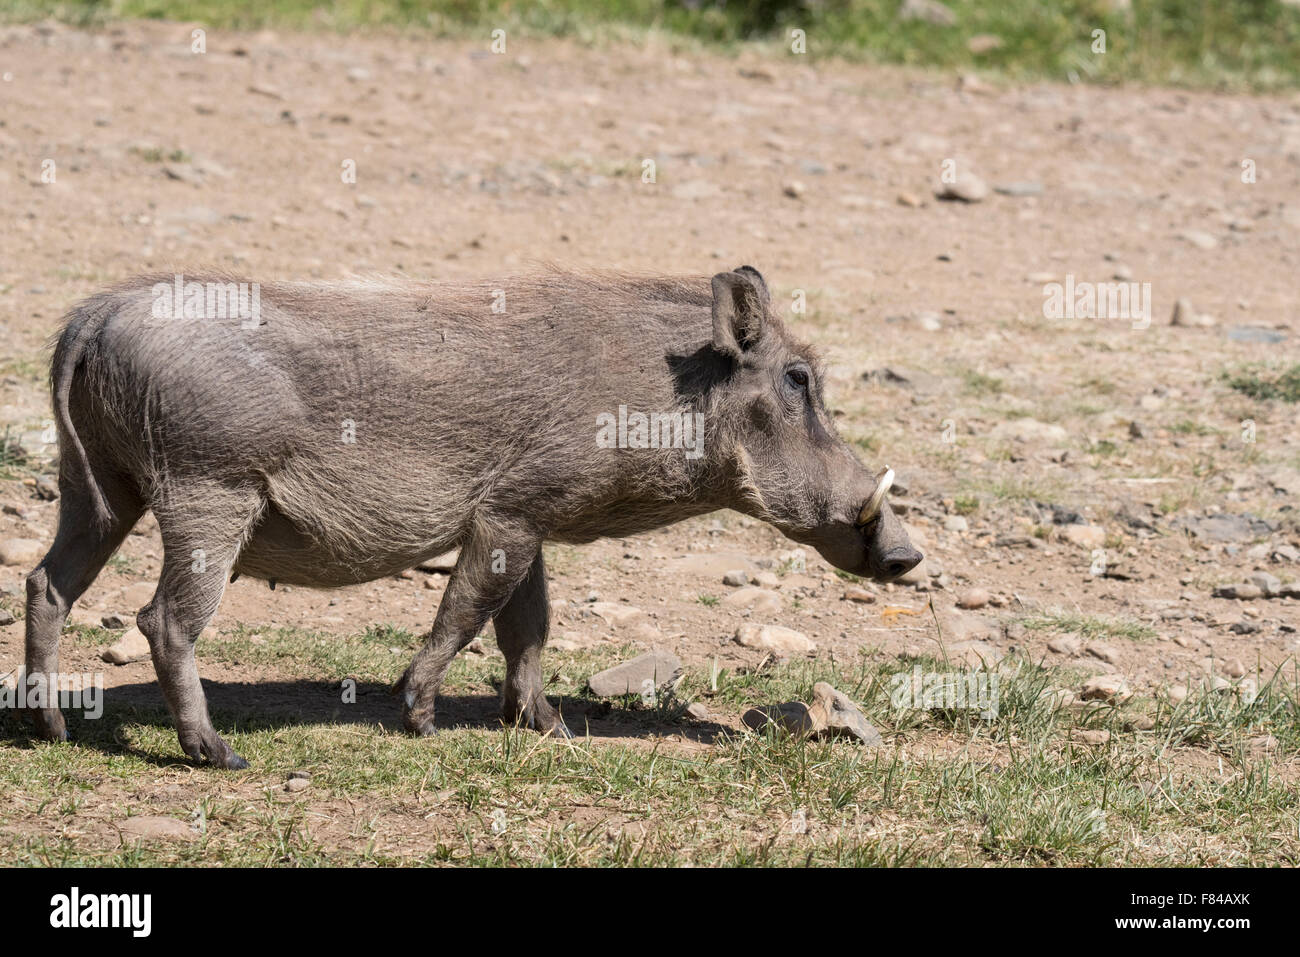 A common Warthog in Ethiopia Stock Photo